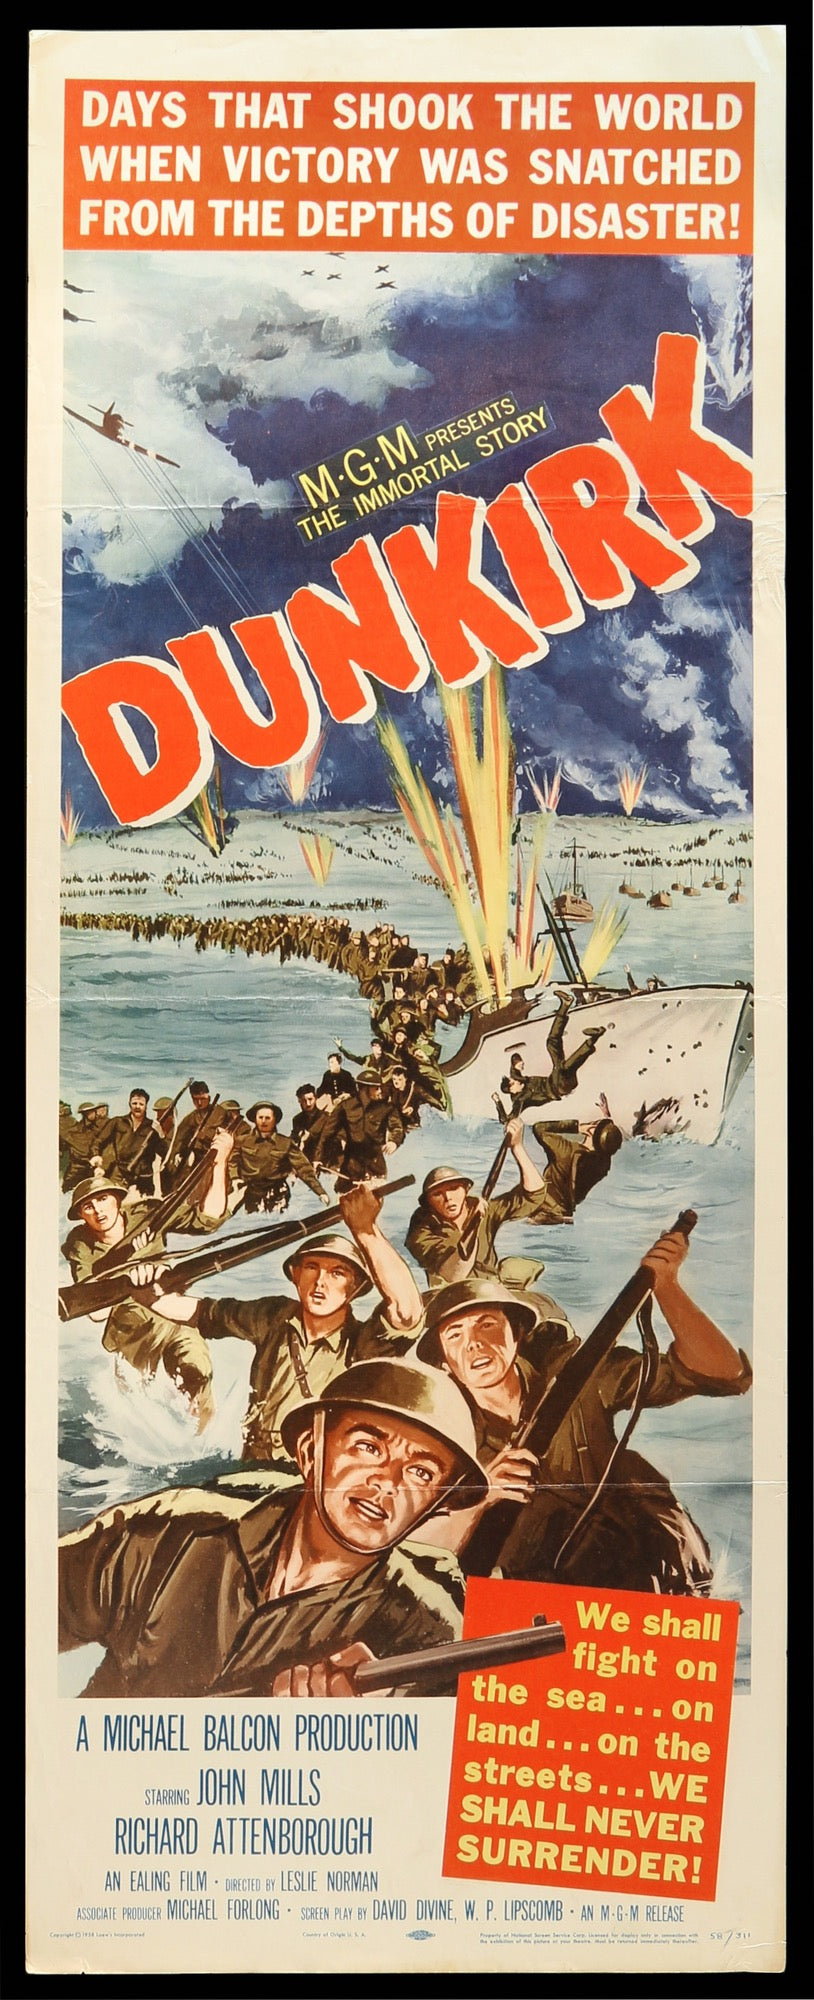 Dunkirk (1958) original movie poster for sale at Original Film Art